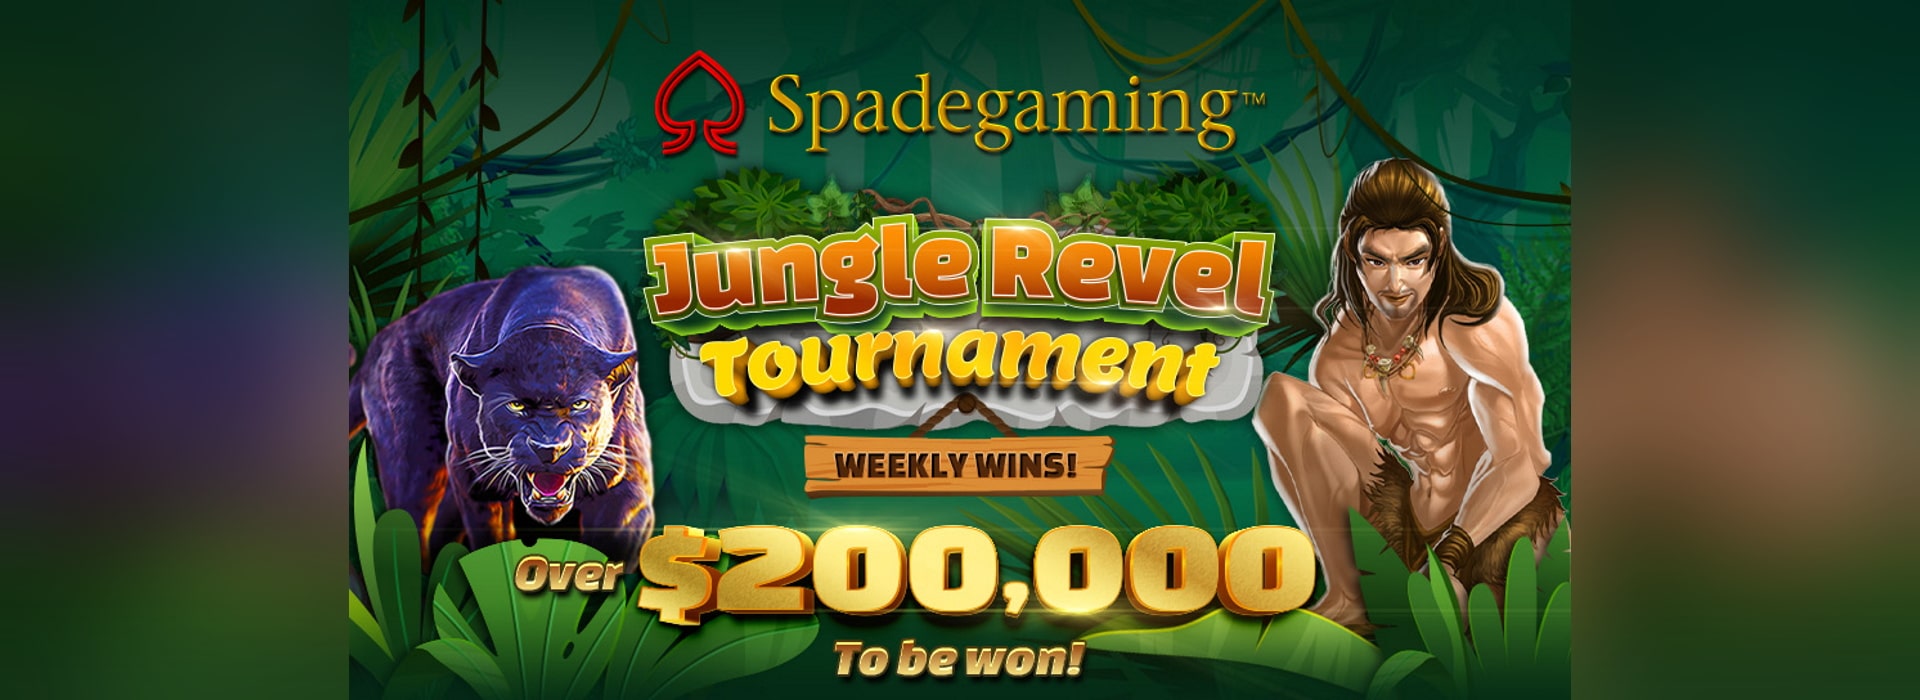 Spadegaming Jungle Revel Tournament